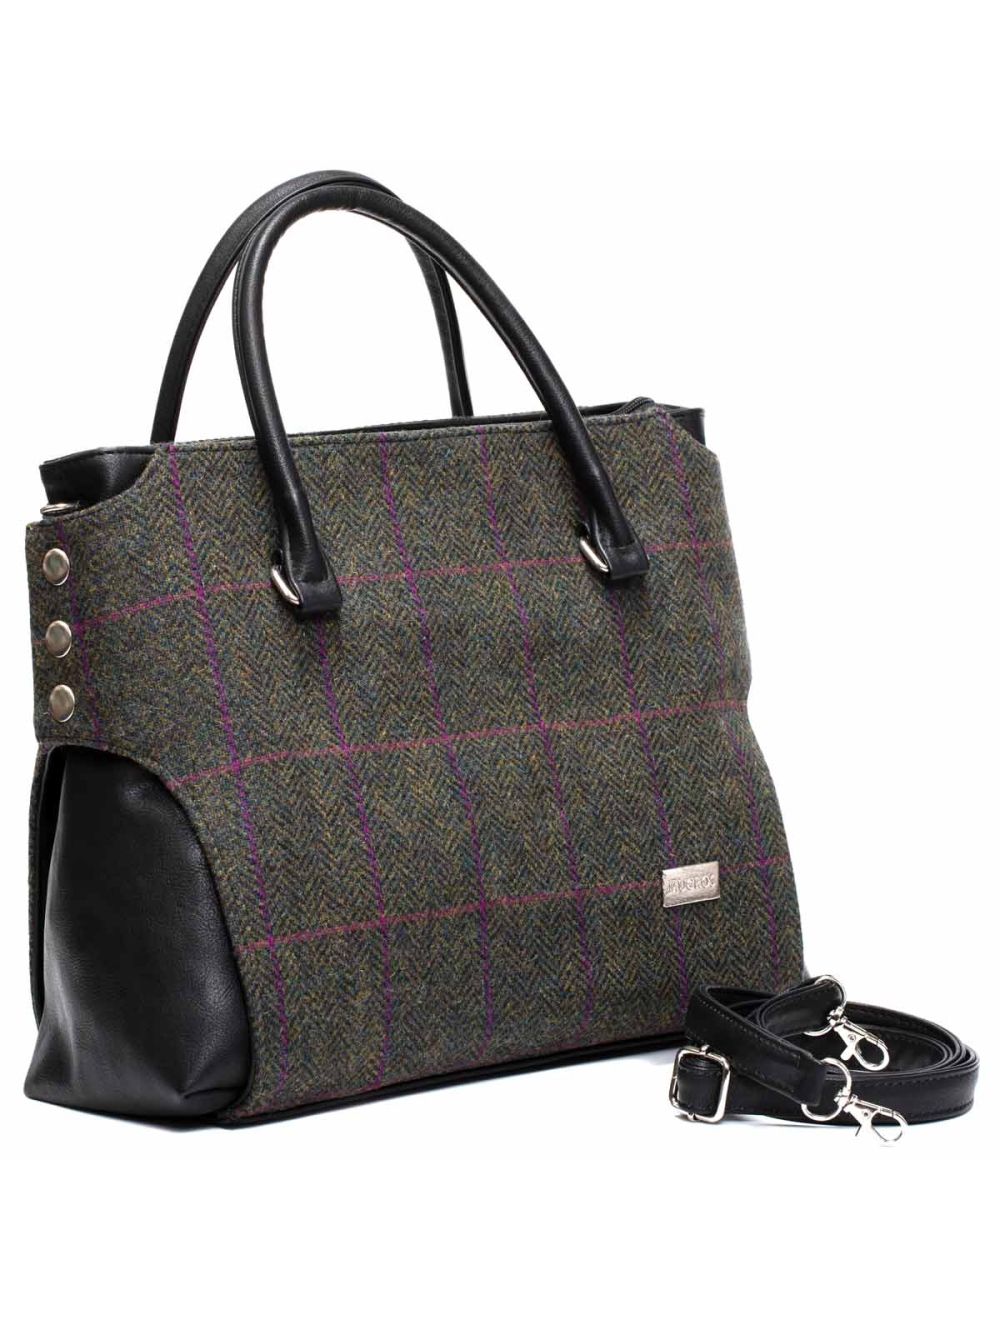 This $23 4-Piece Handbag Set Has 25,600+ Amazon 5-Star Reviews